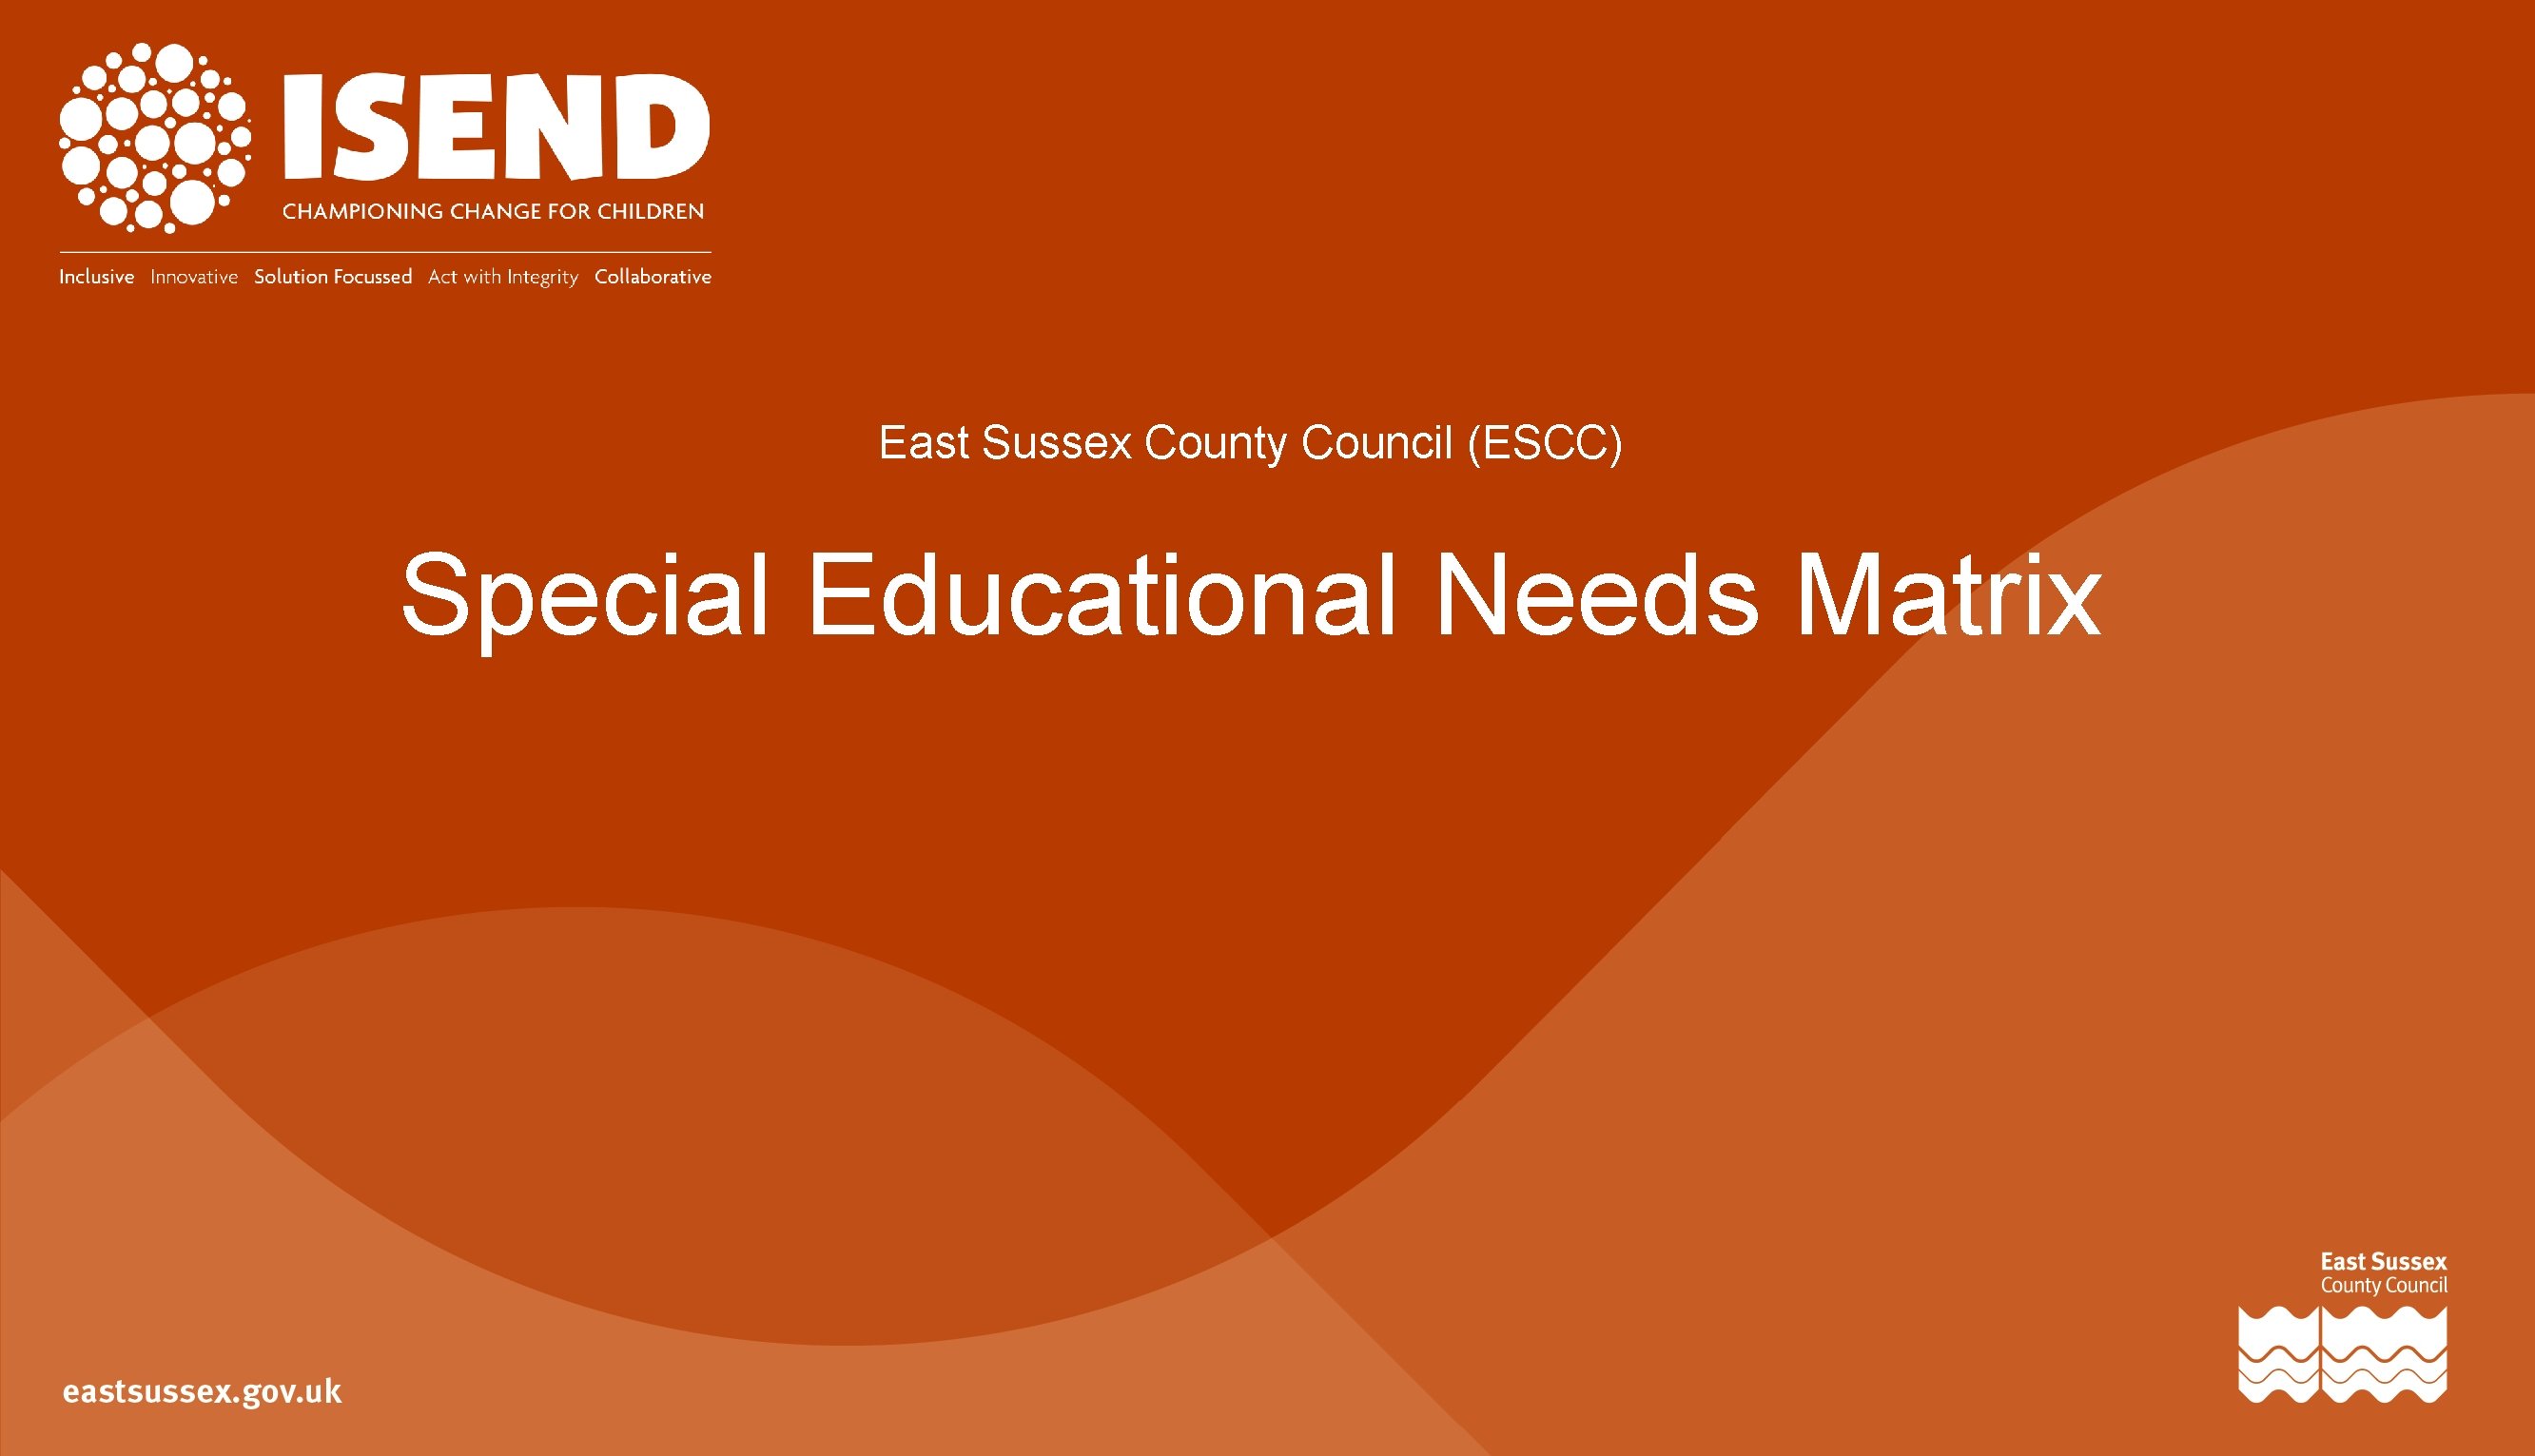 East Sussex County Council (ESCC) Special Educational Needs Matrix 